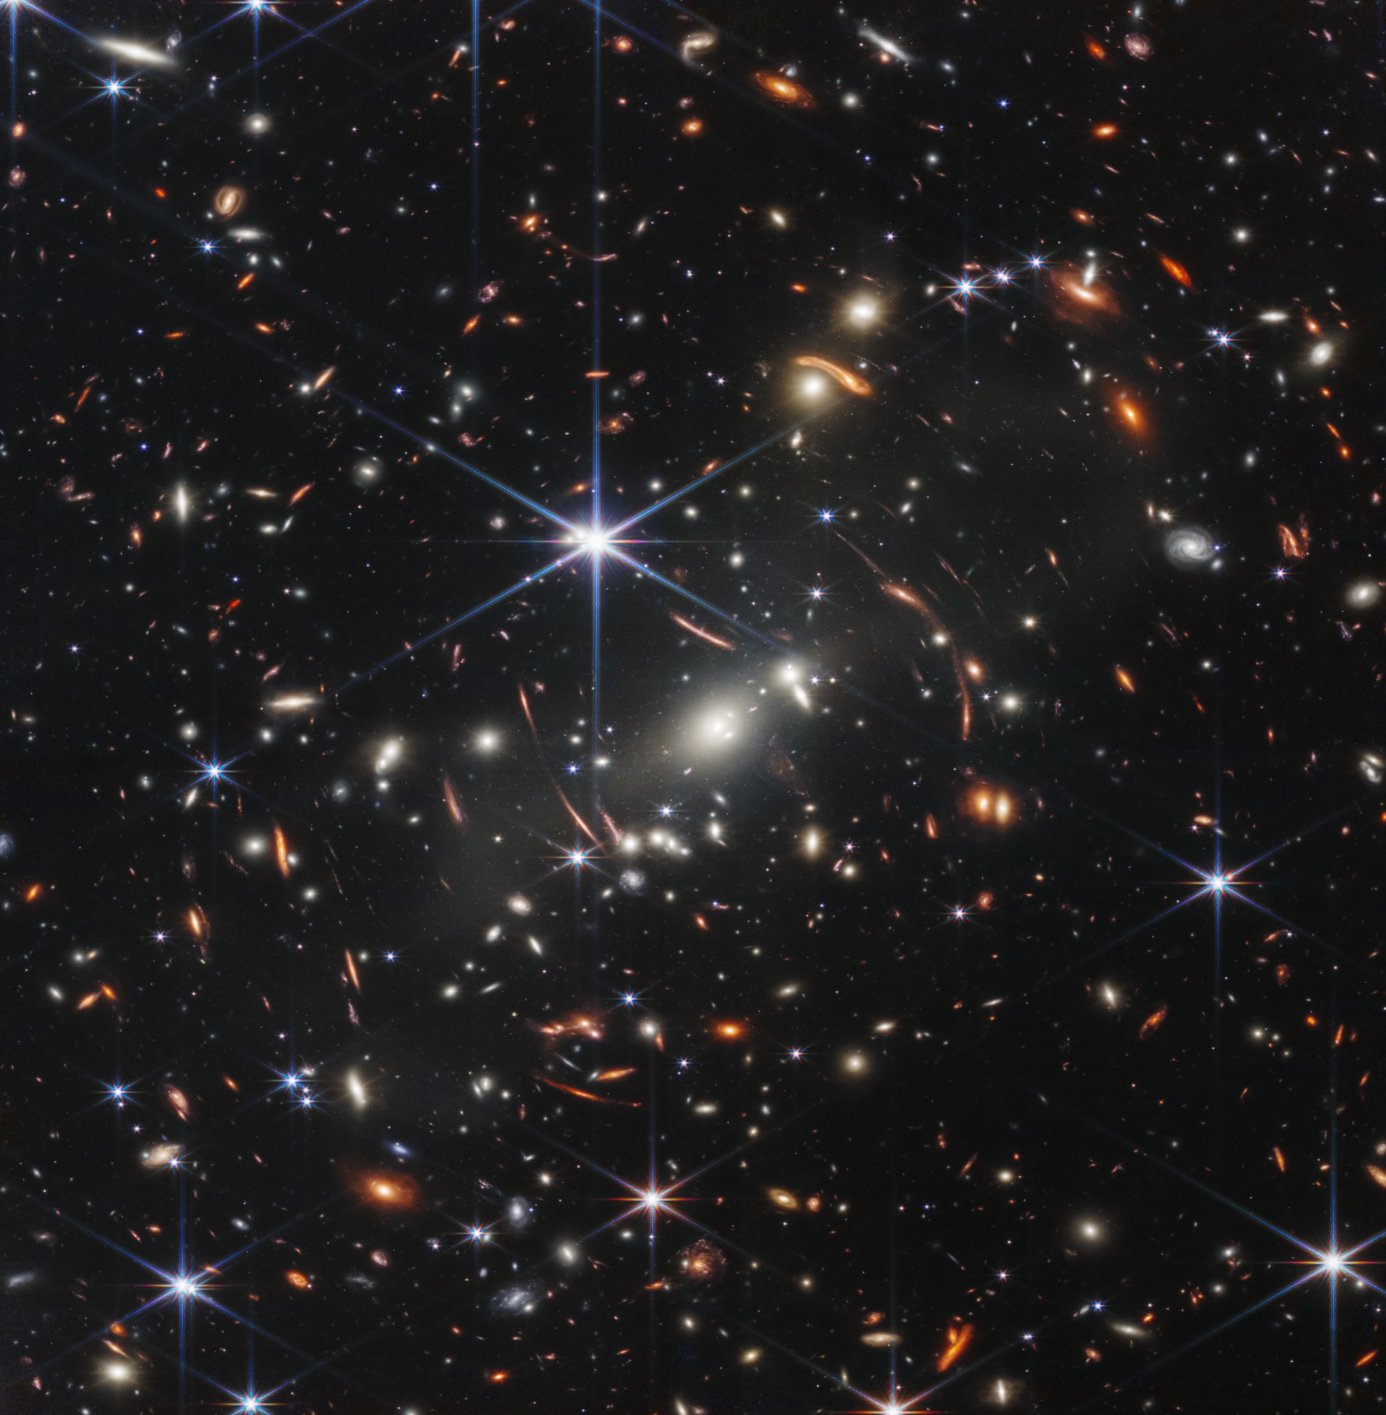 Zdjęcie z Teleskopu Jamesa Webba